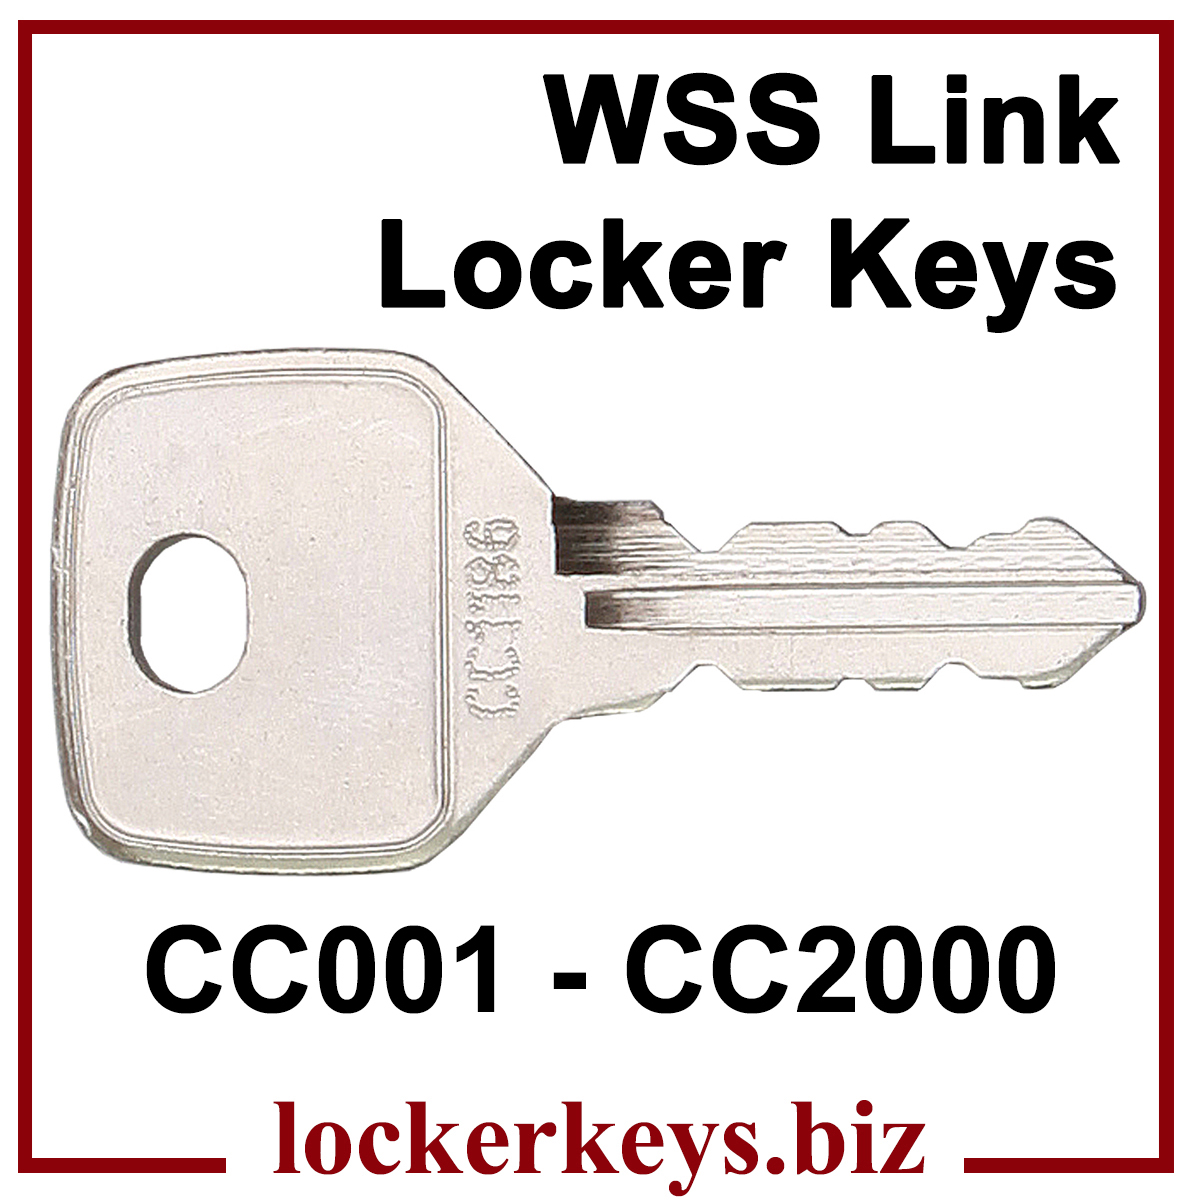 WSS Ronis Link CC Locker Keys CC001 - CC2000